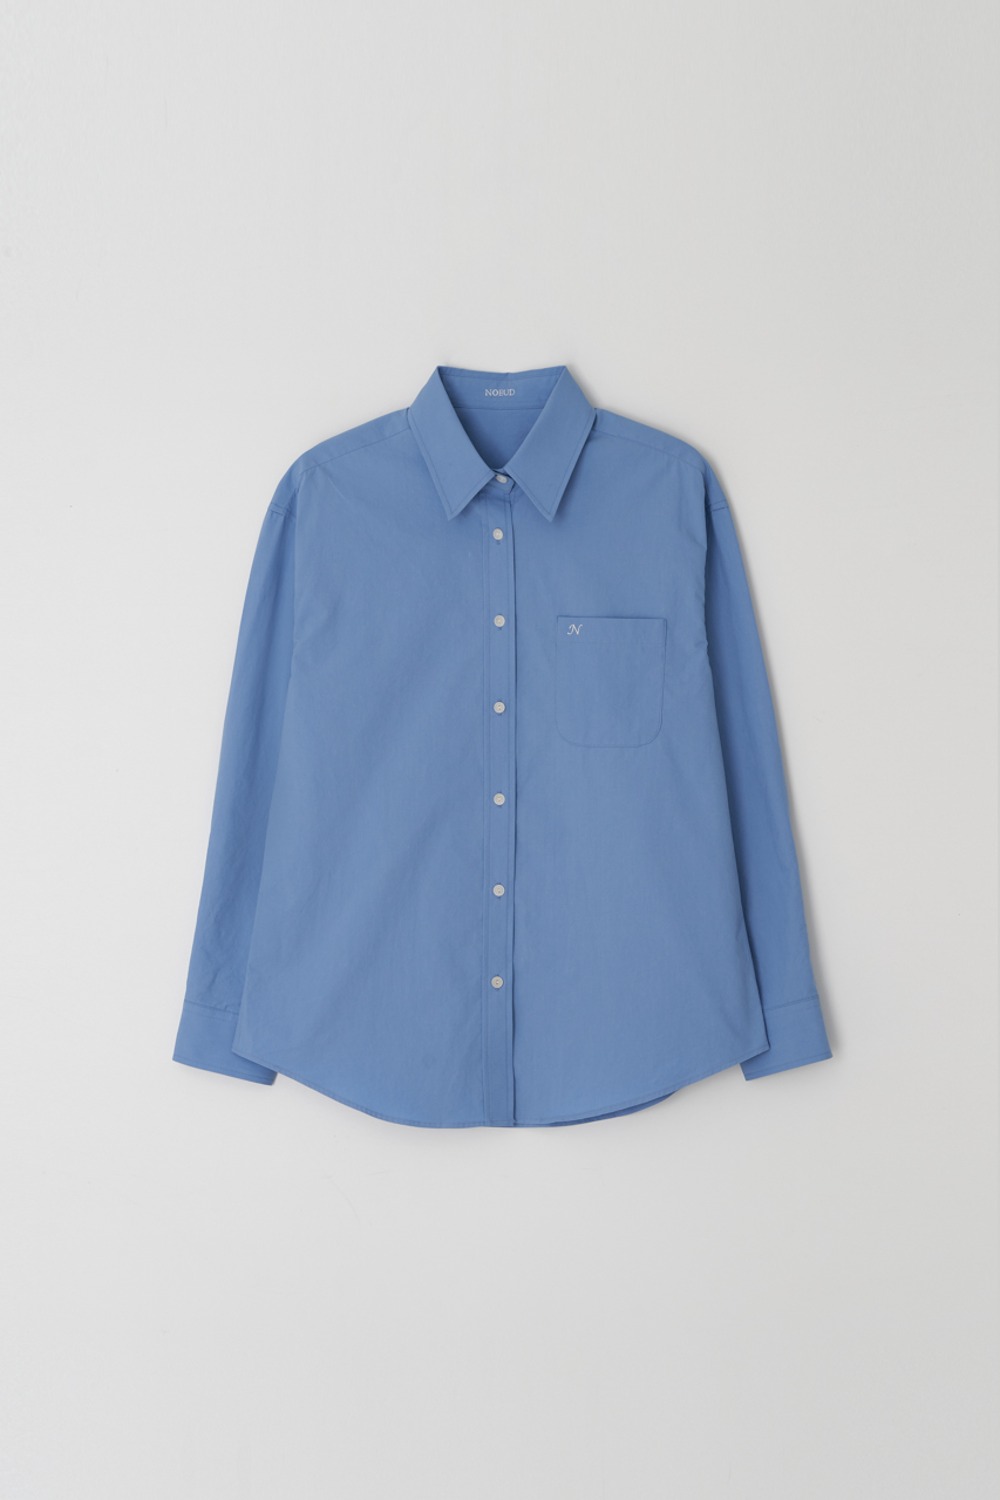 Needle cotton shirt (Blue)